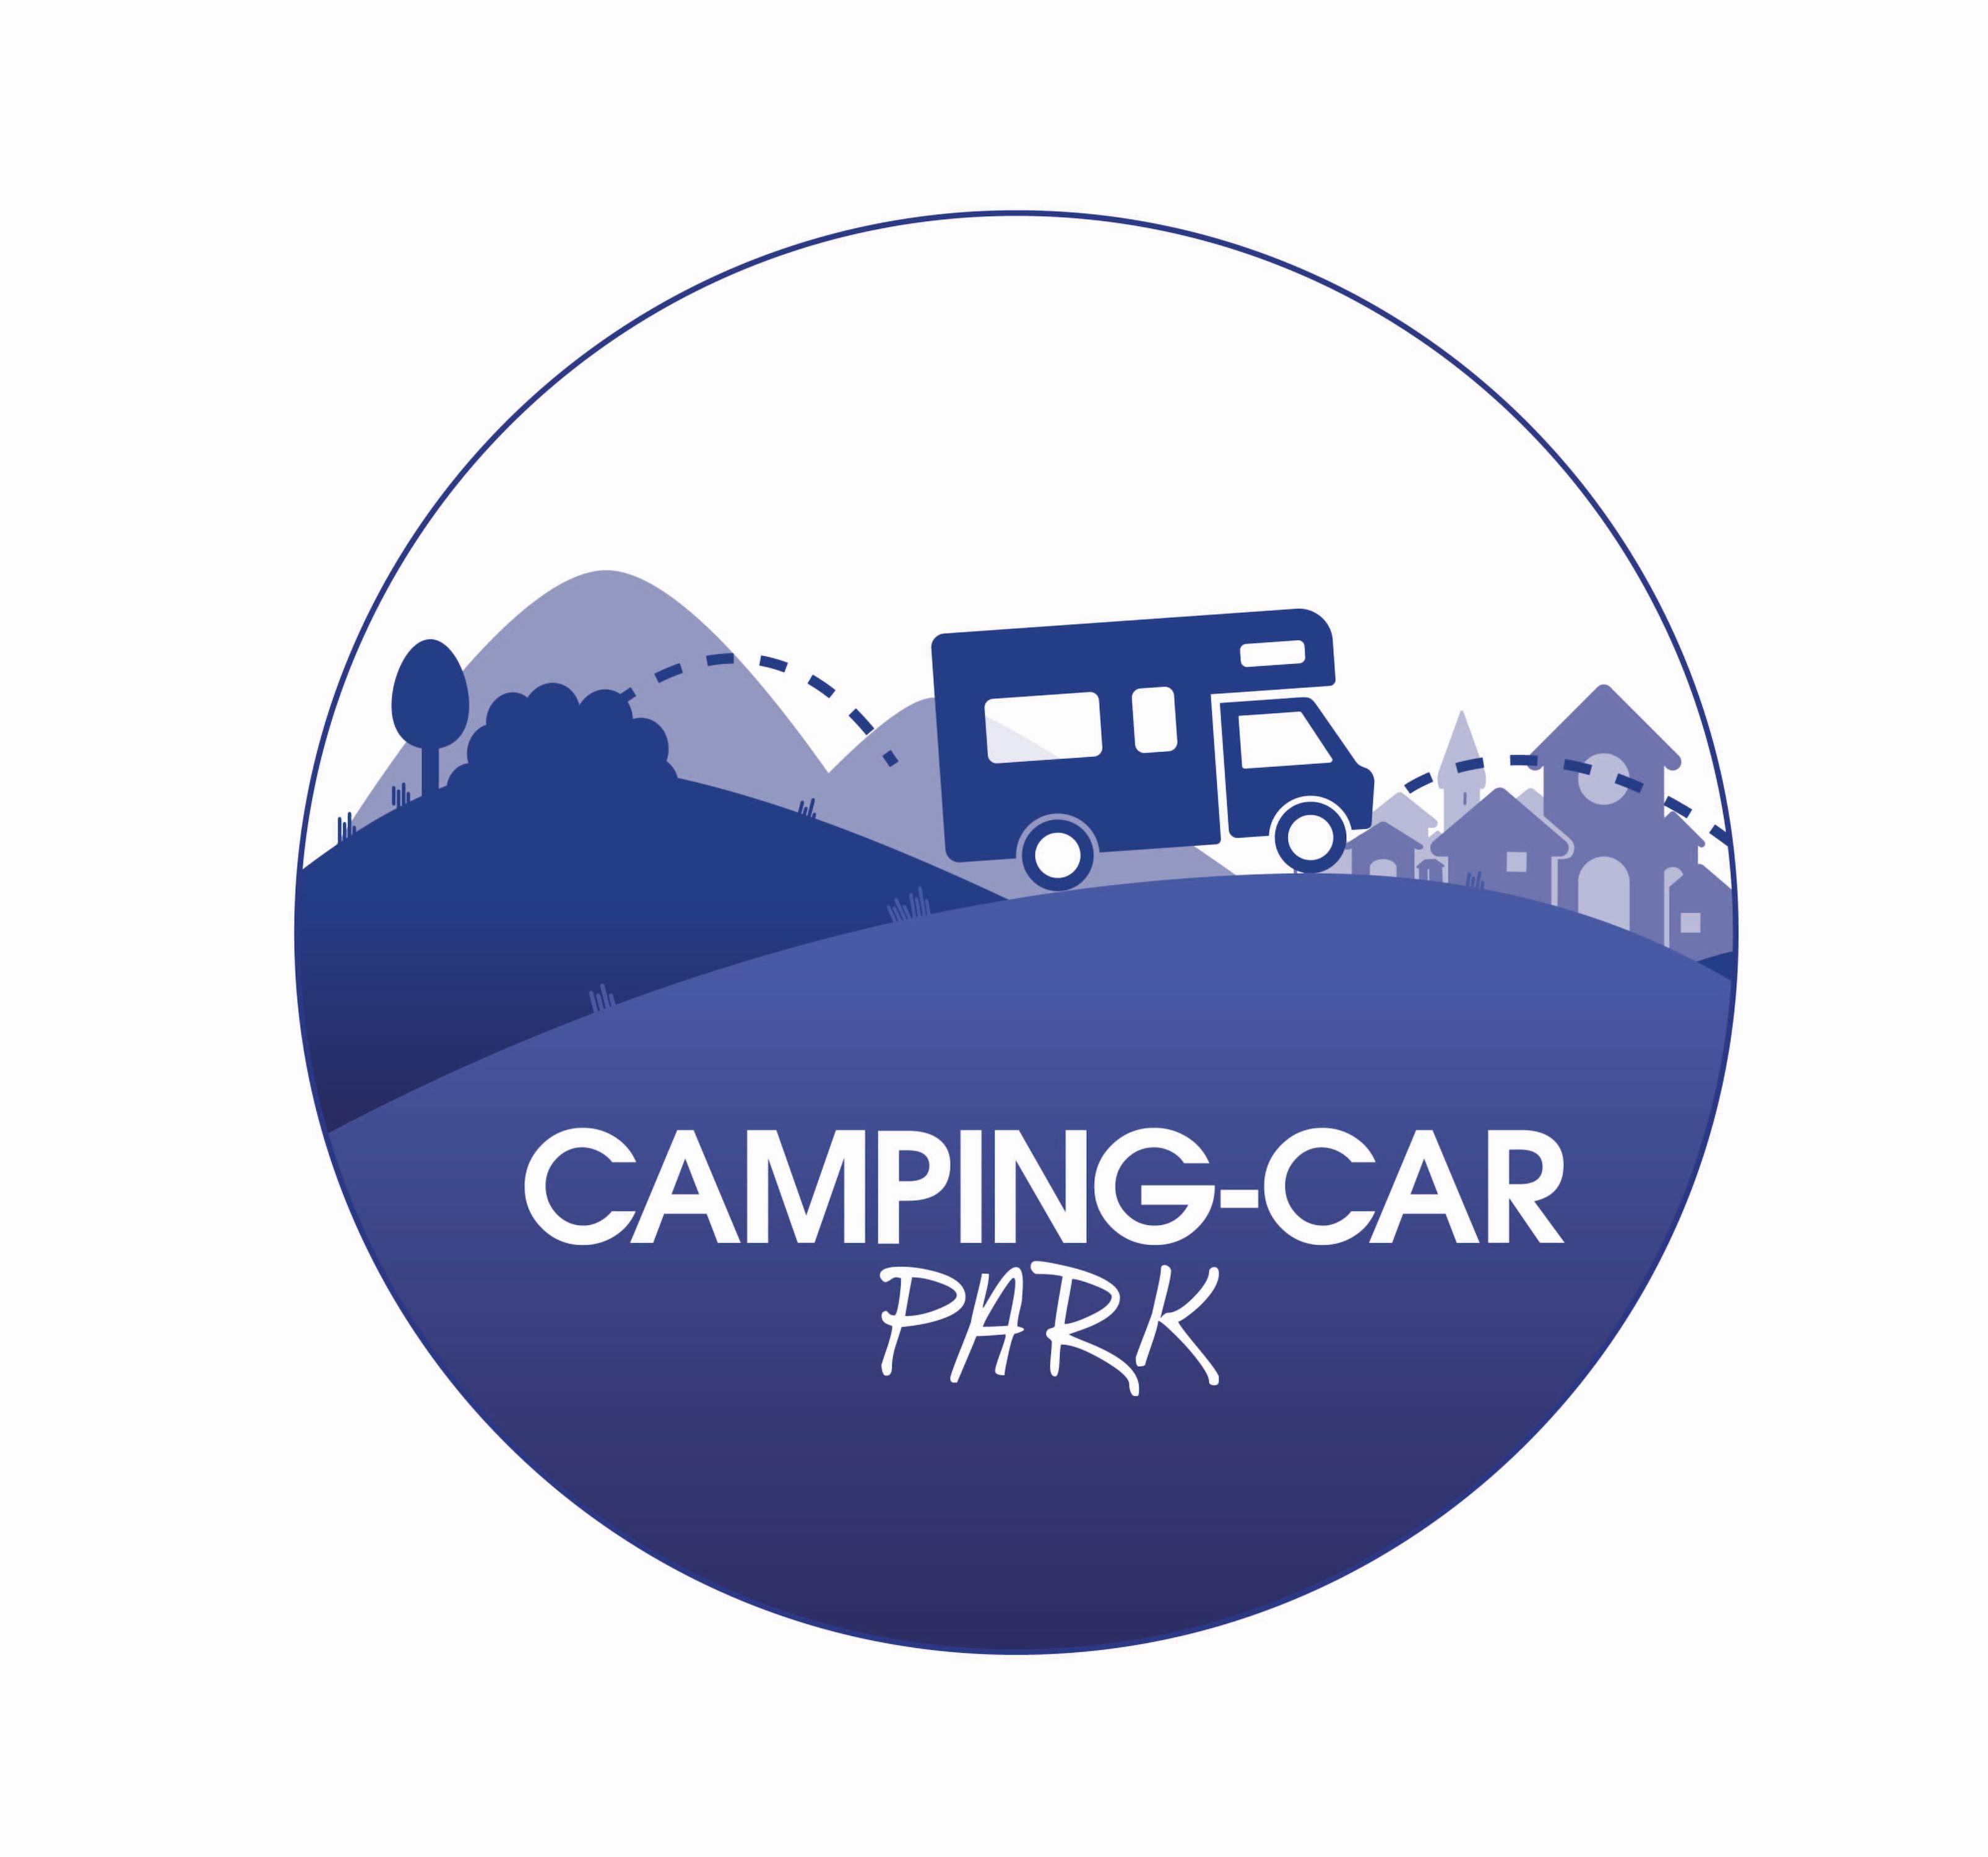 Camping-car Park Triaize